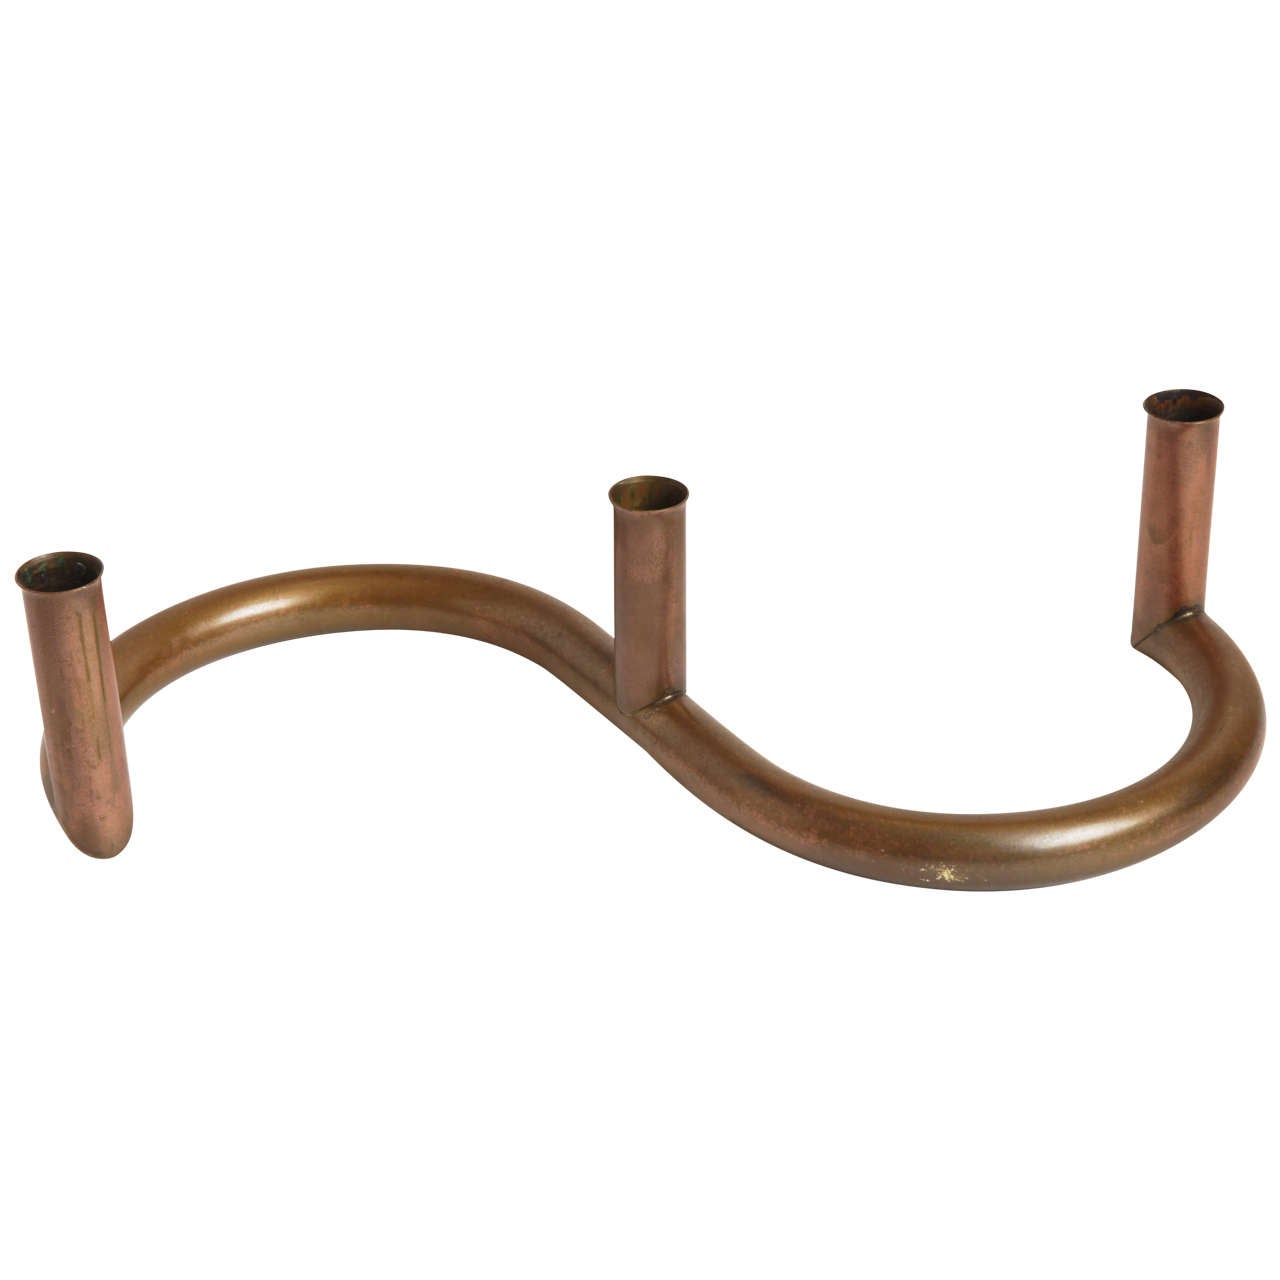 Bauhaus influenced copper art deco candlestick holder For Sale